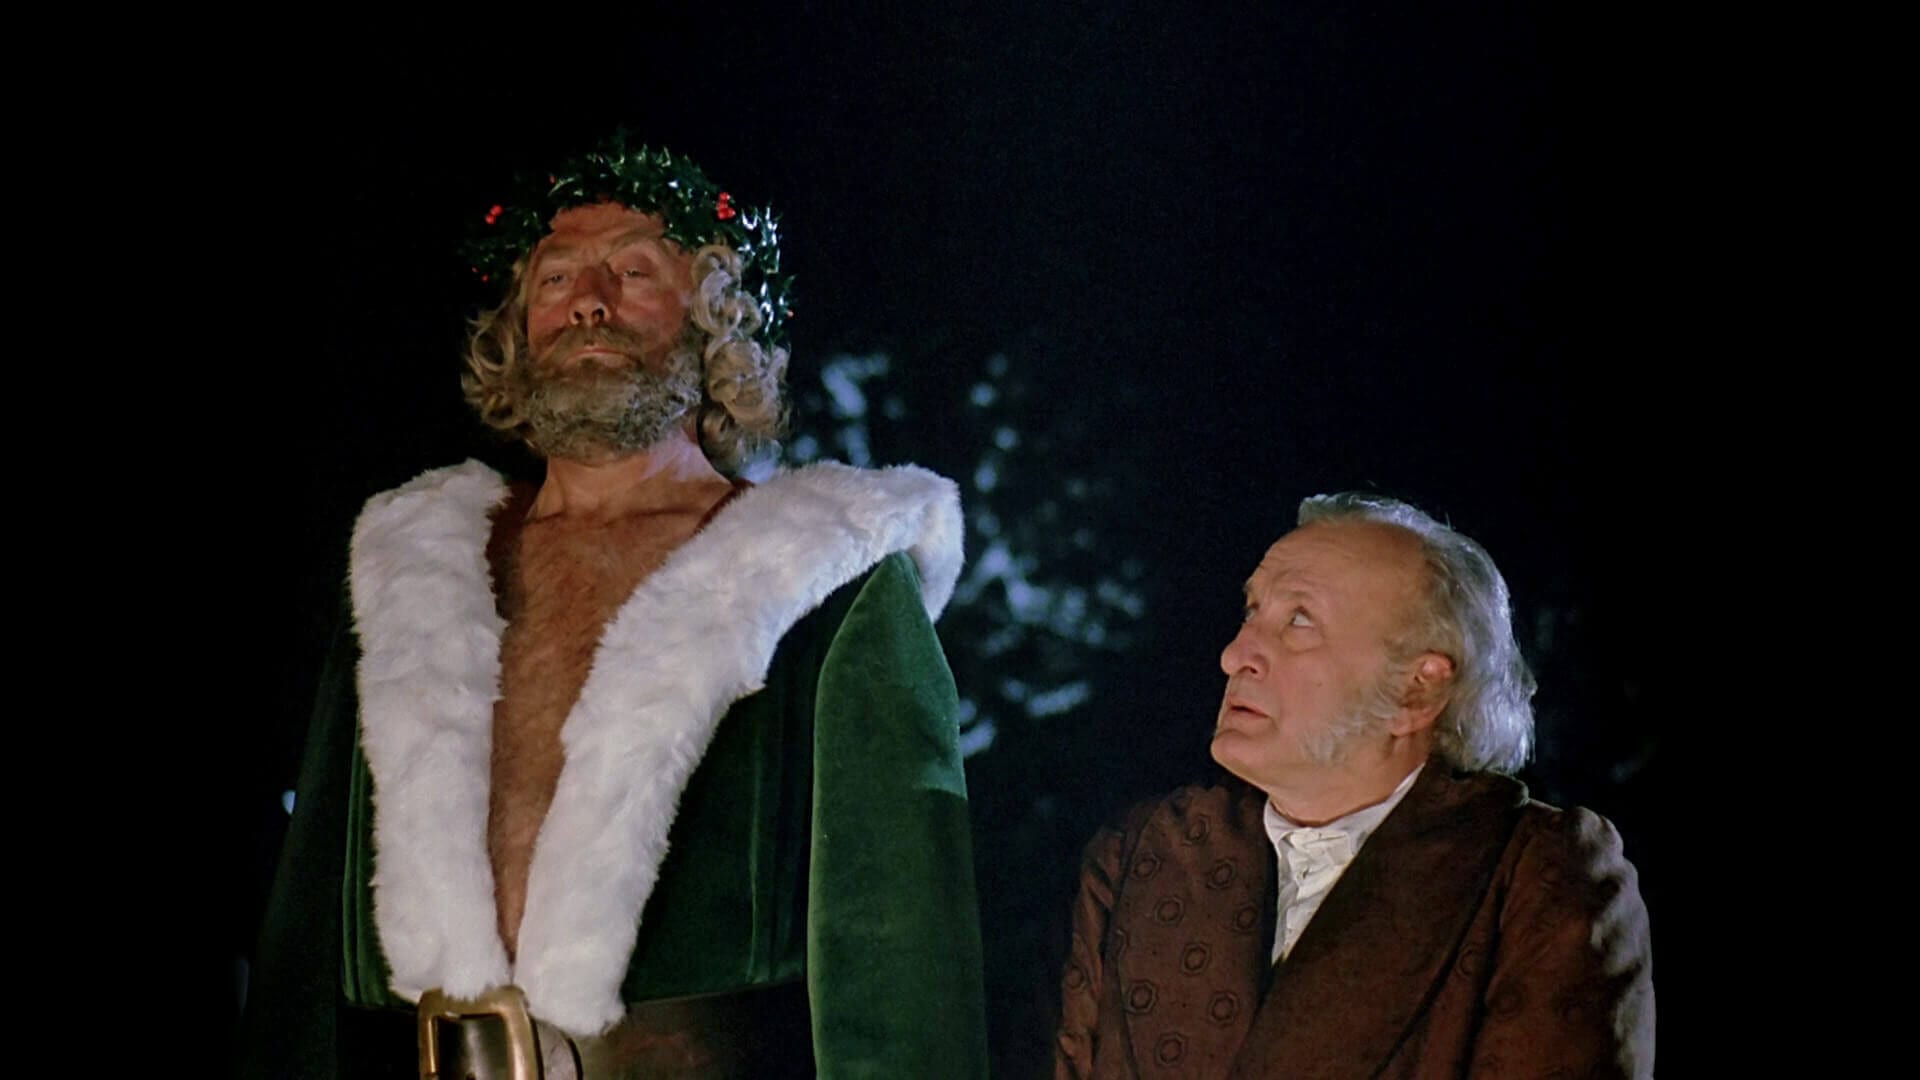 A Christmas Carol, Ebenezer Scrooge, George C. Scott